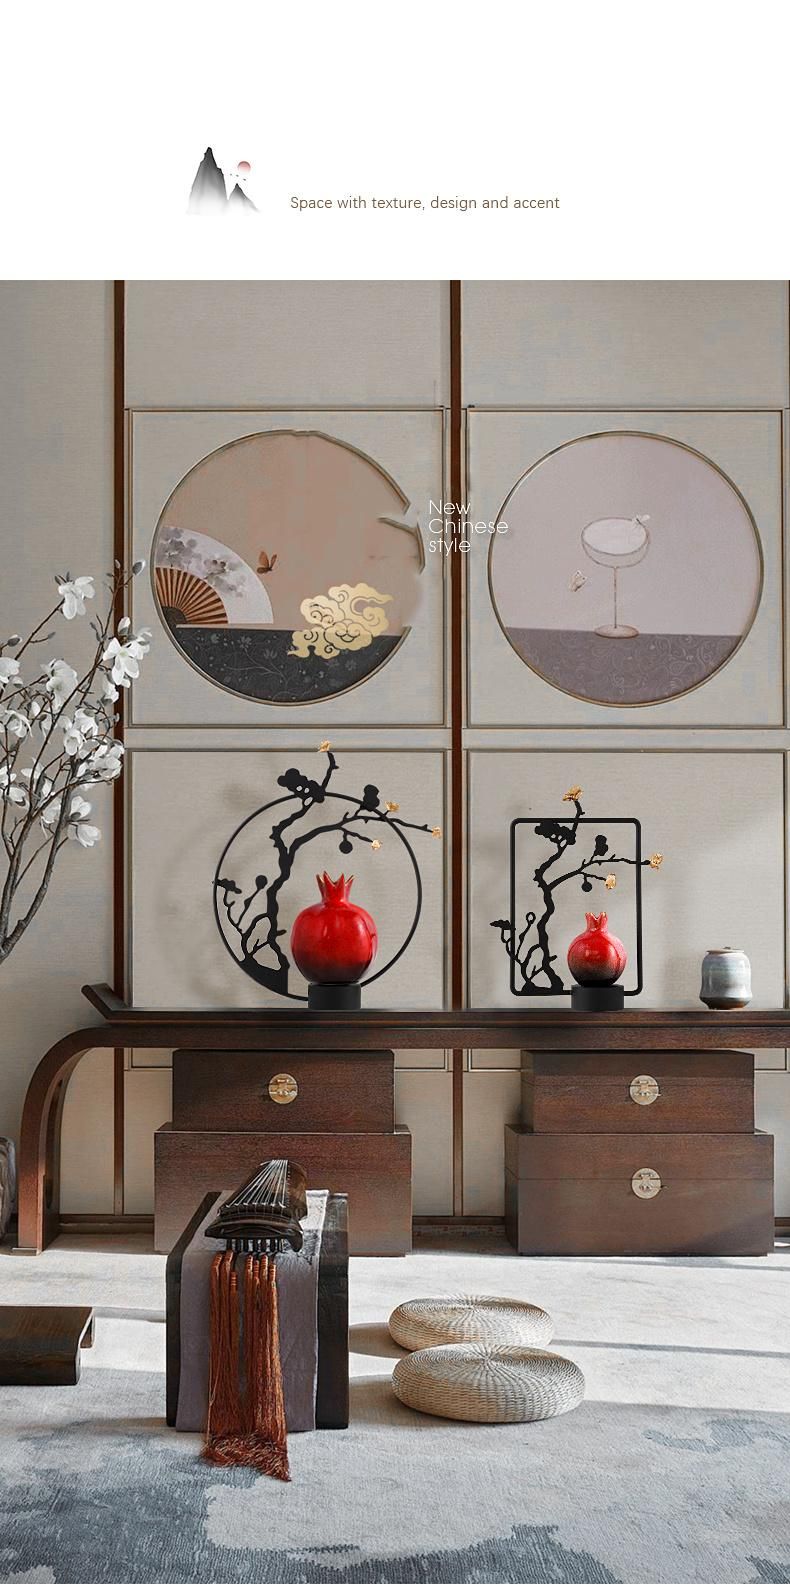 Creative Decoration Chinese Style Living Room Retro Decor Pomegranate Ceramic Home Accessories